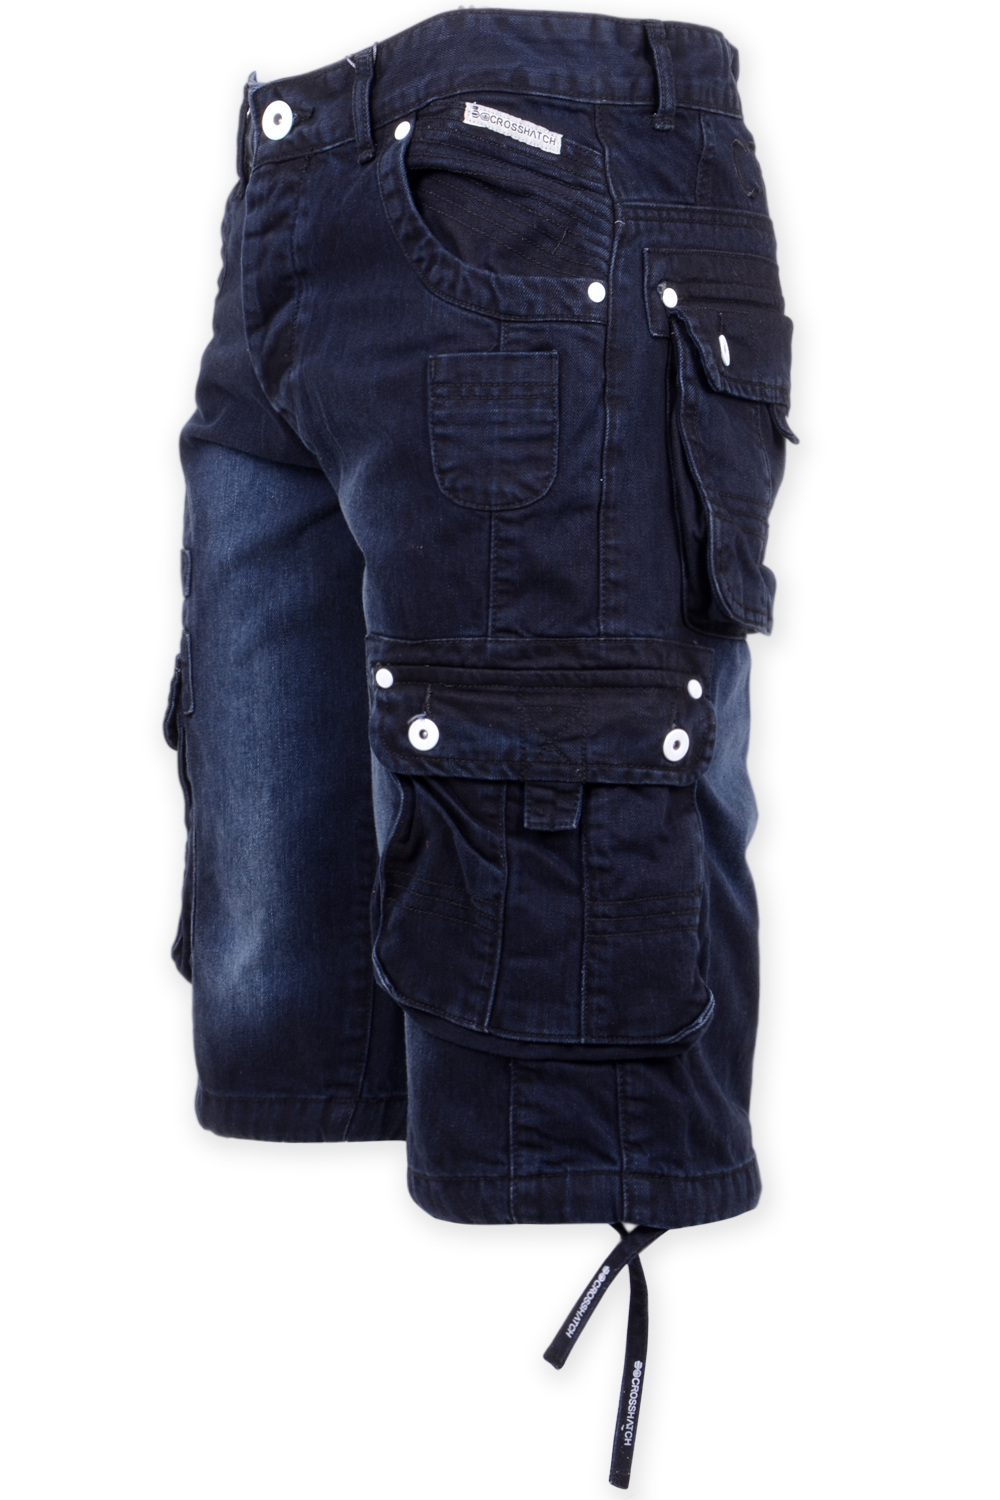 Crosshatch Mens Nordica New Designer Denim Shorts Knee Length Cargo Jeans Pants Ebay